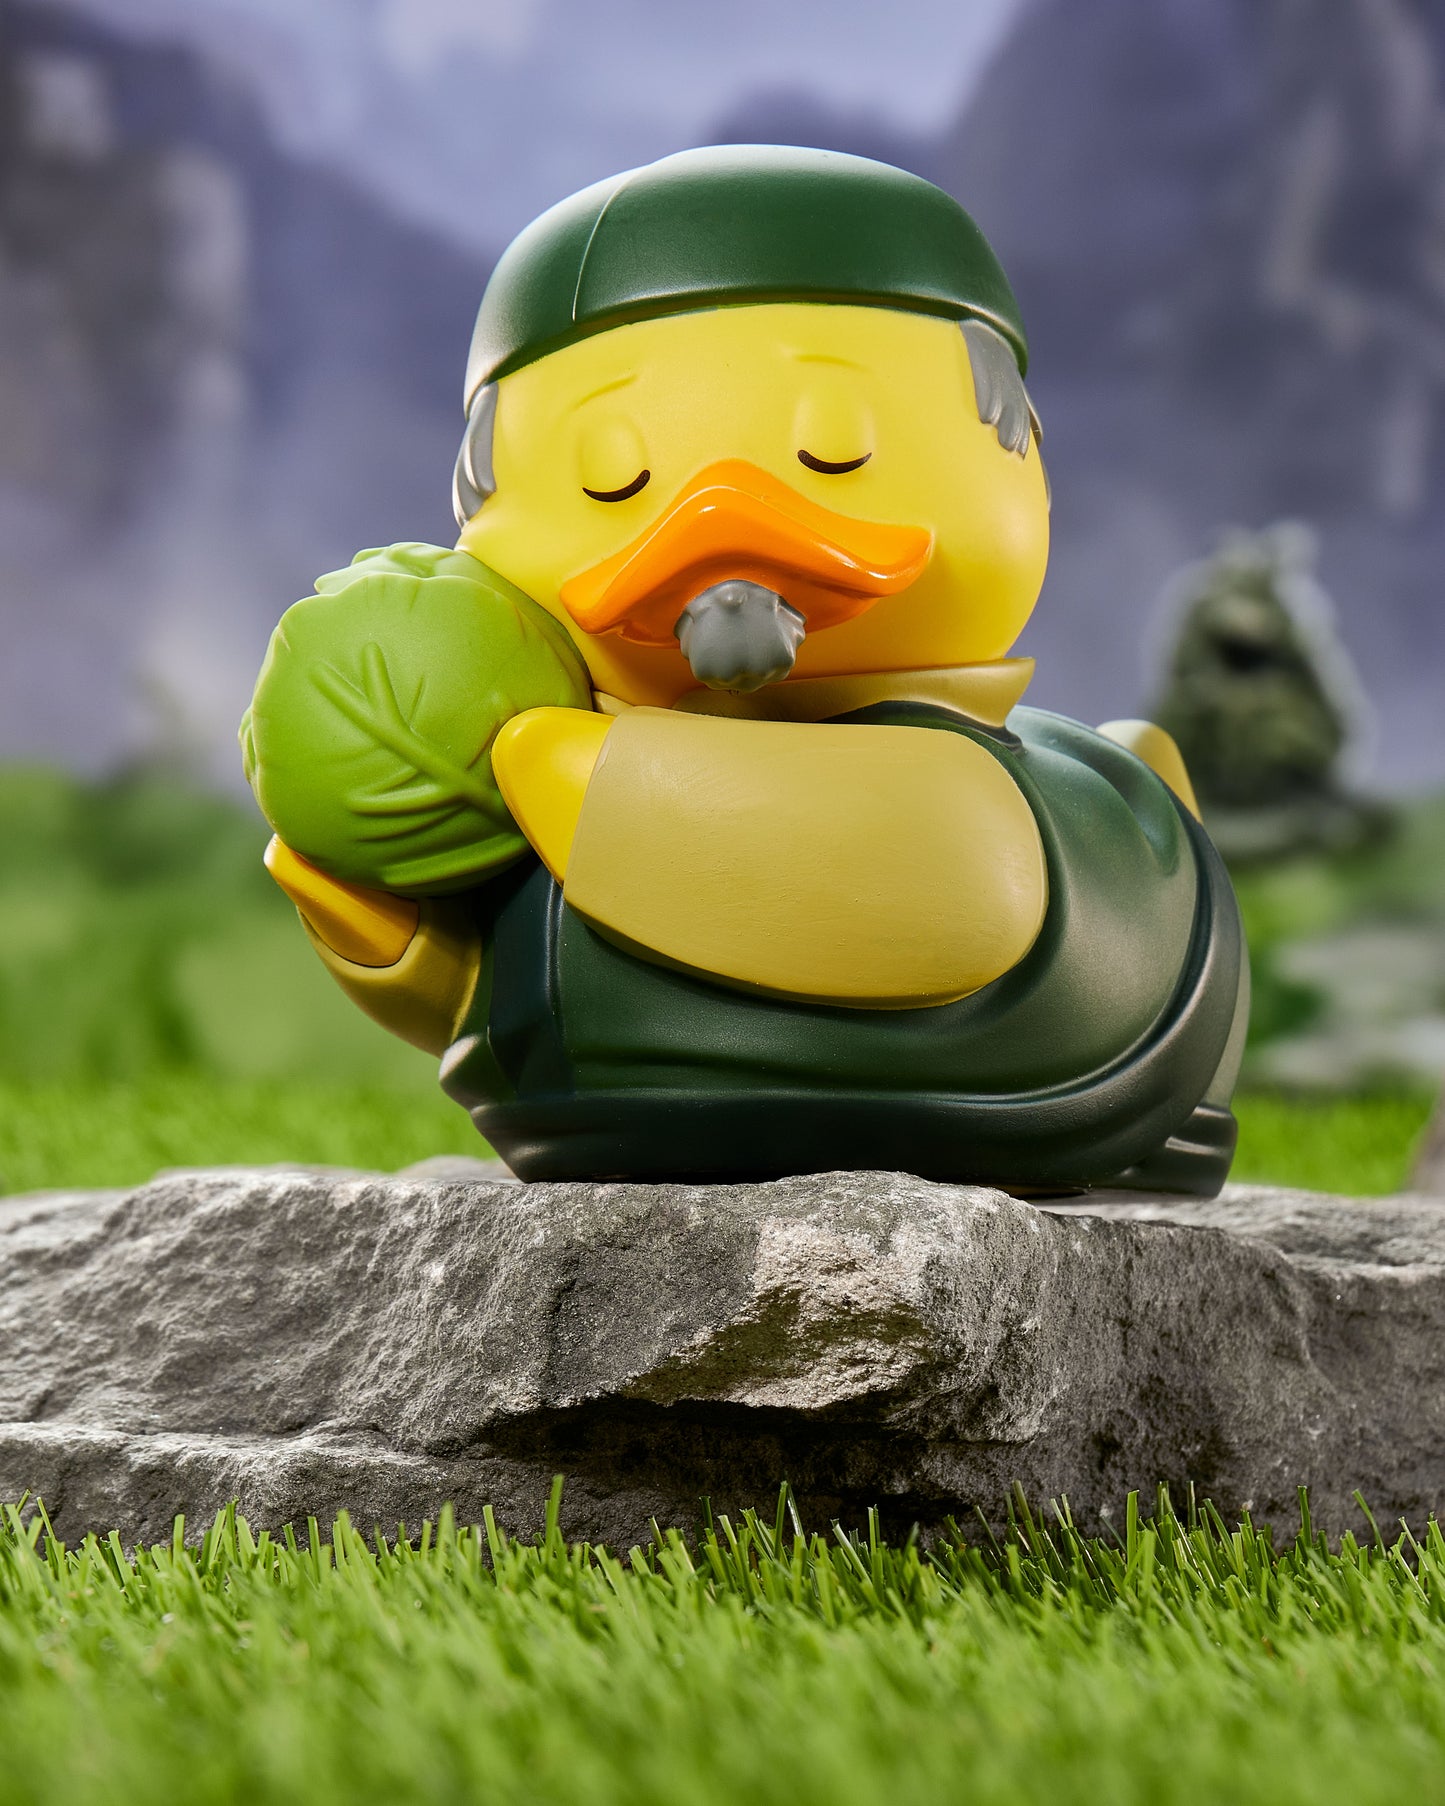 Ducks Avatar: The Last Airbender - PRE-ORDER*